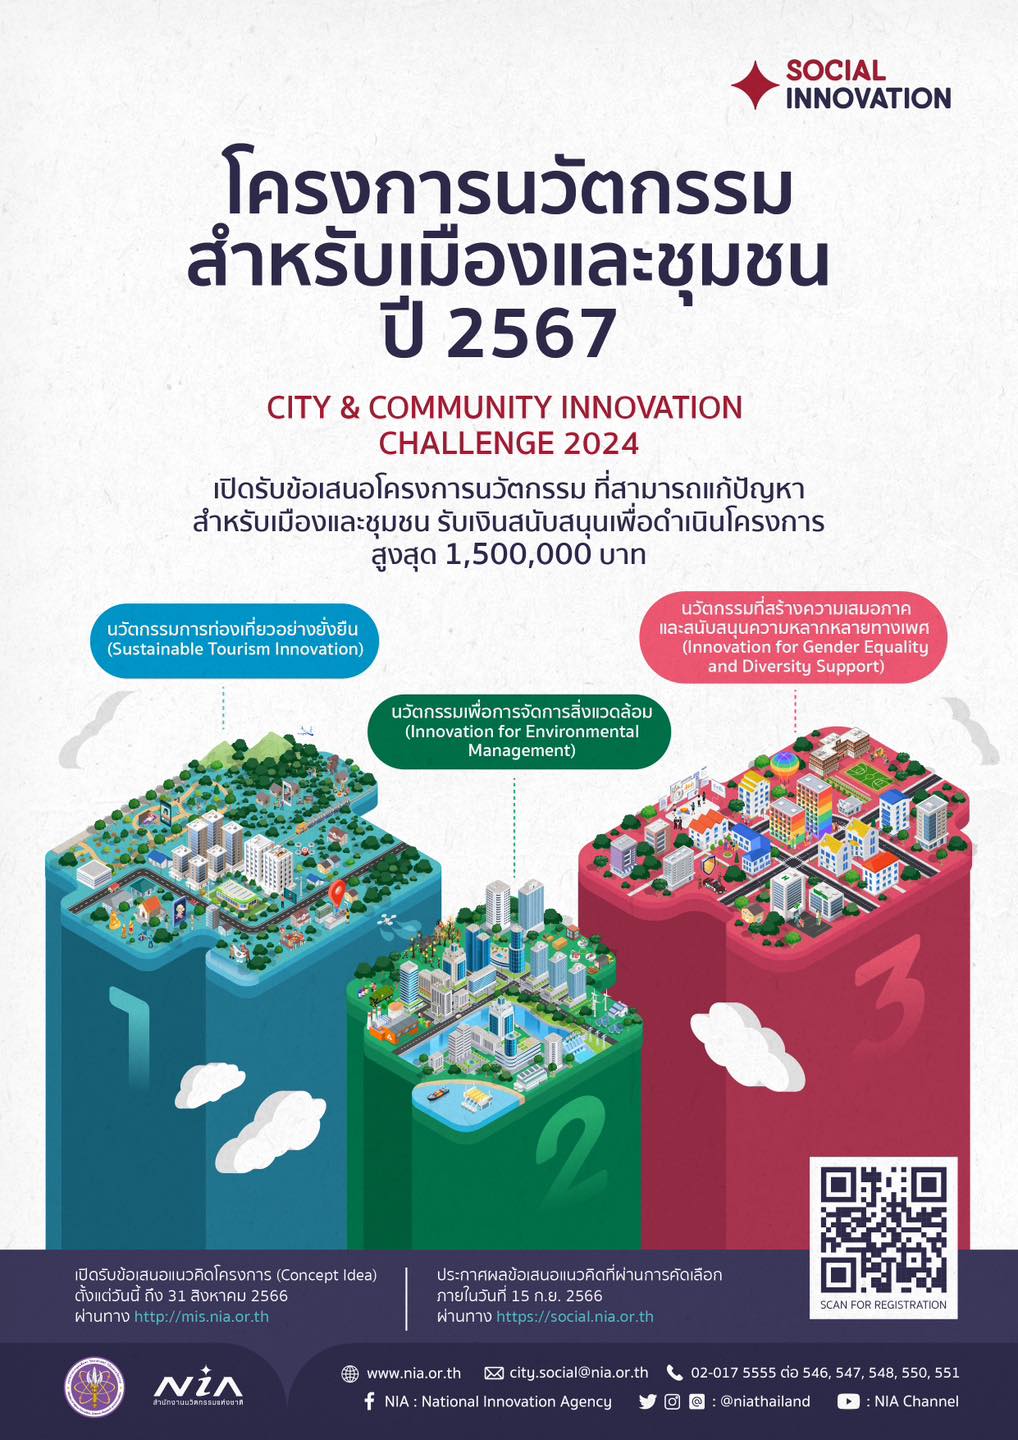 City & Community Innovation Challenge 2024